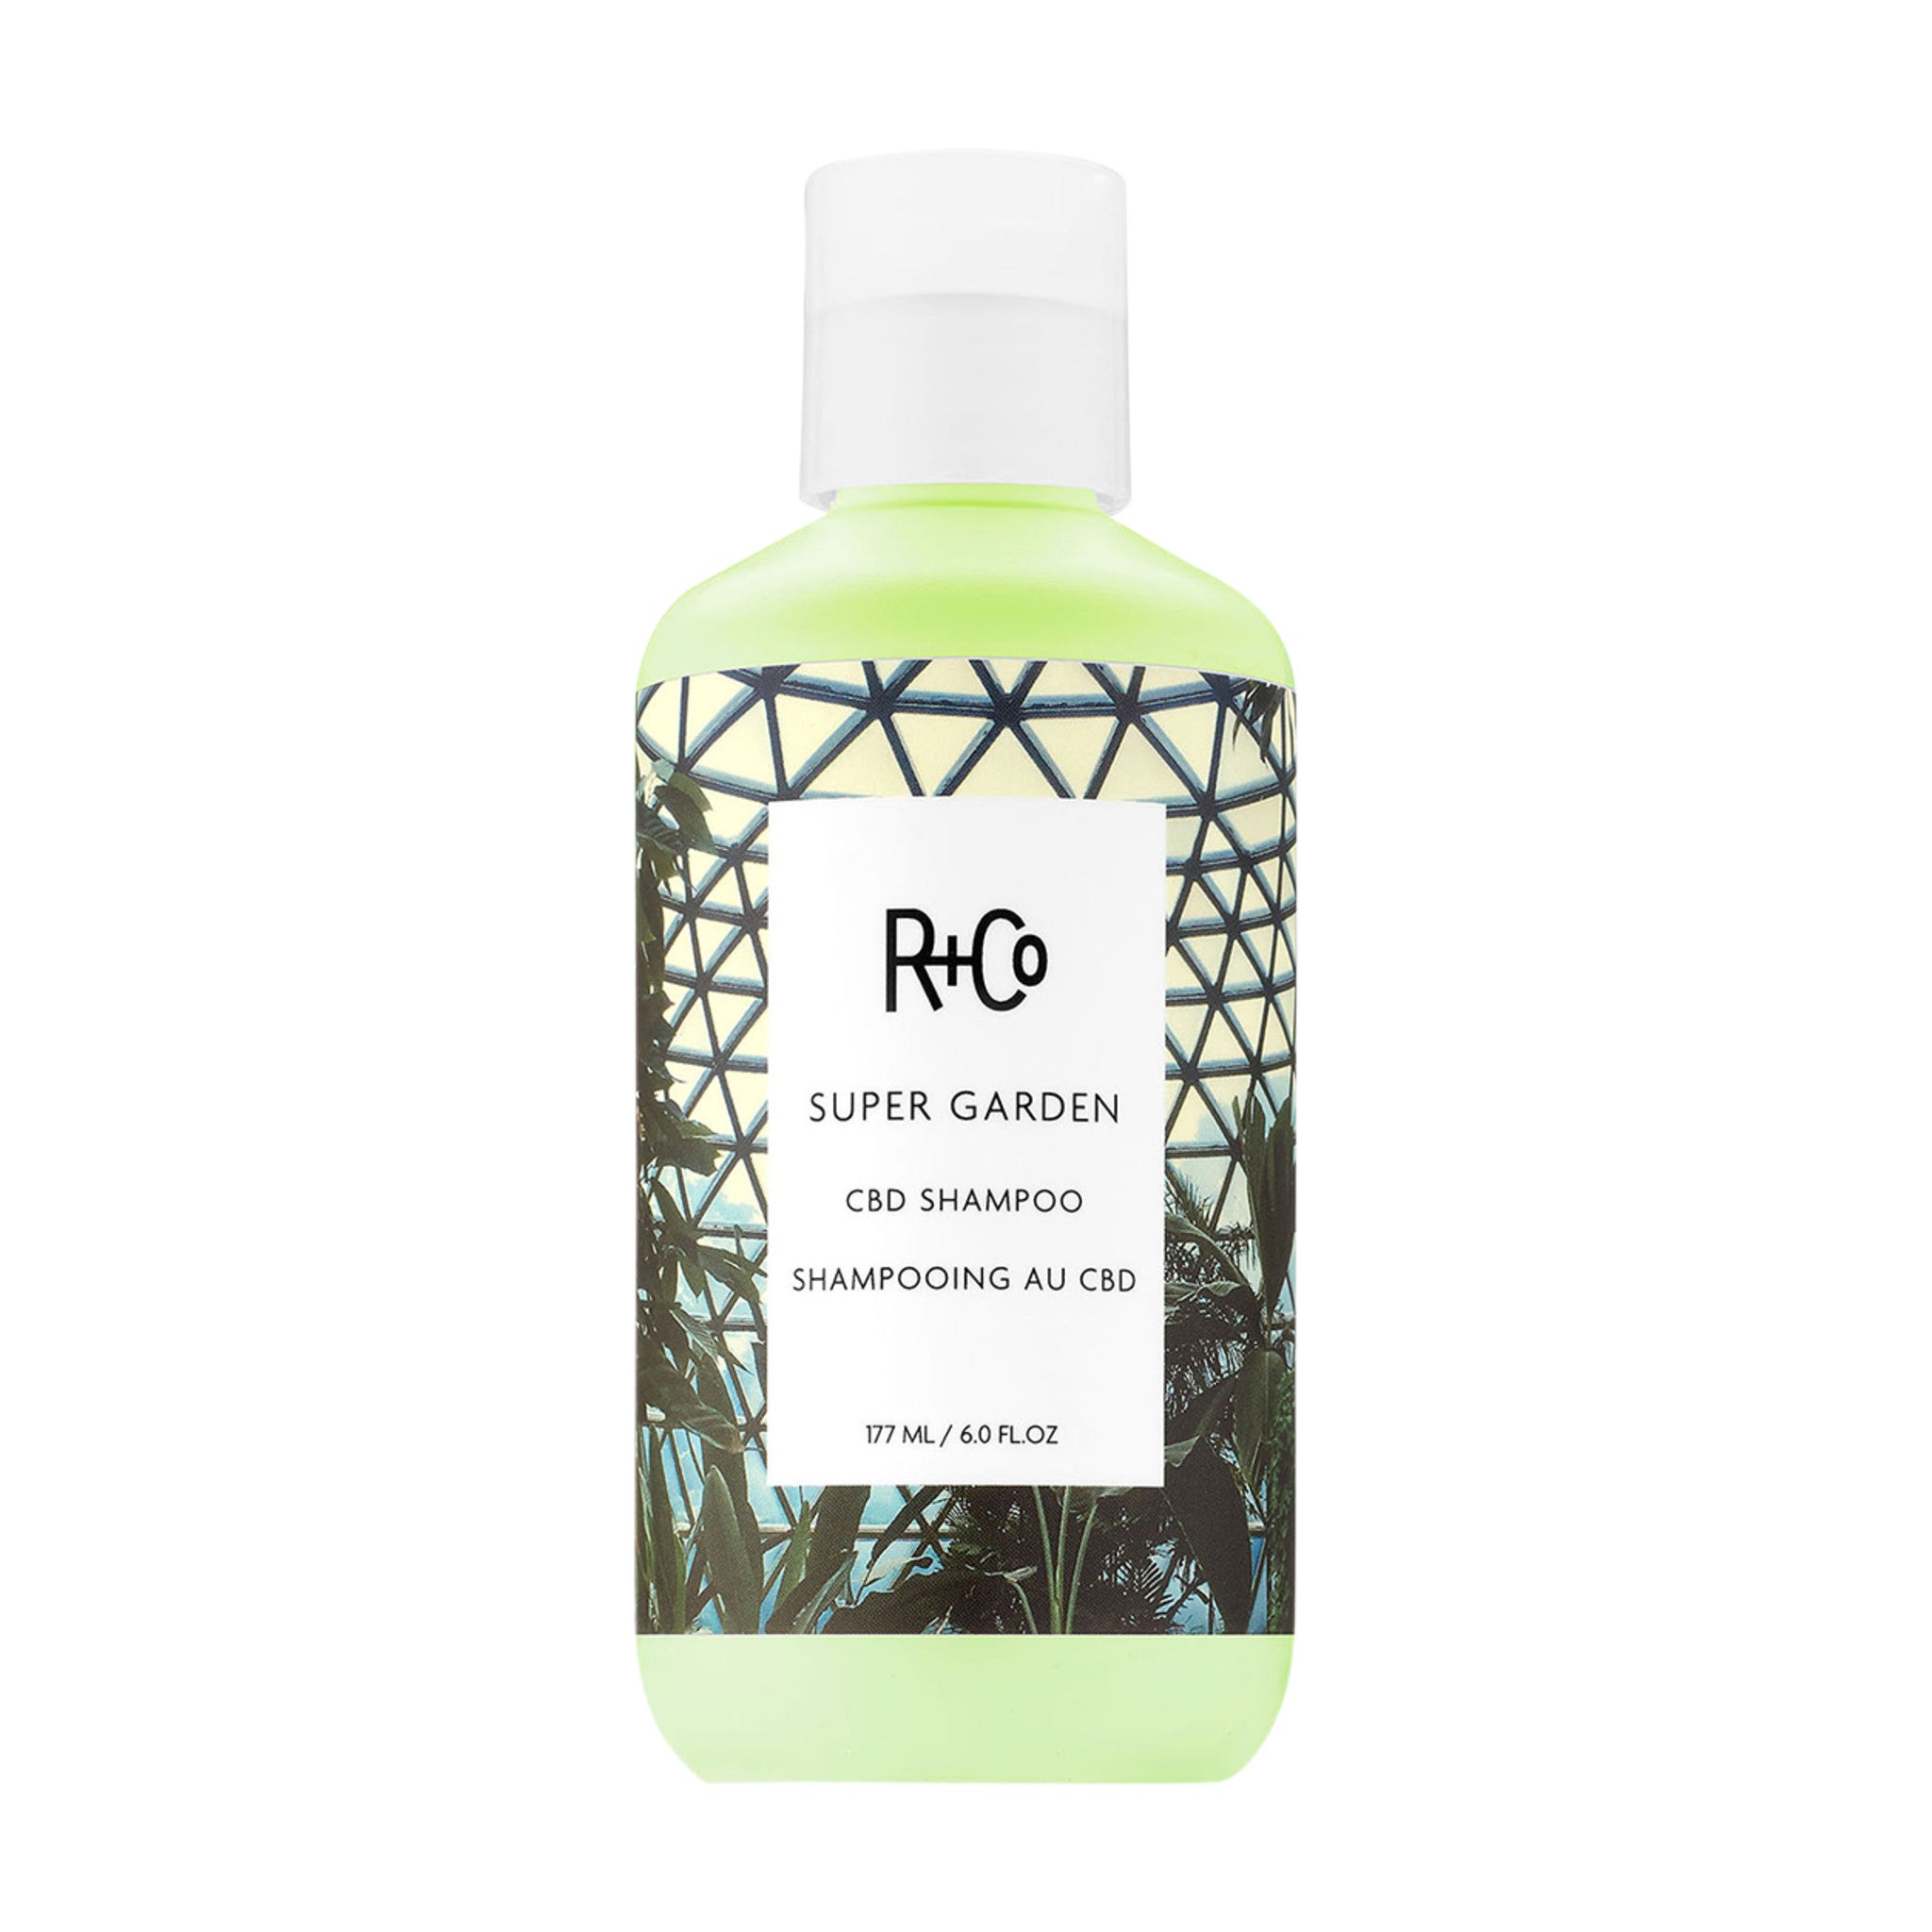 R+Co SuperGarden CBD Shampoo main image.